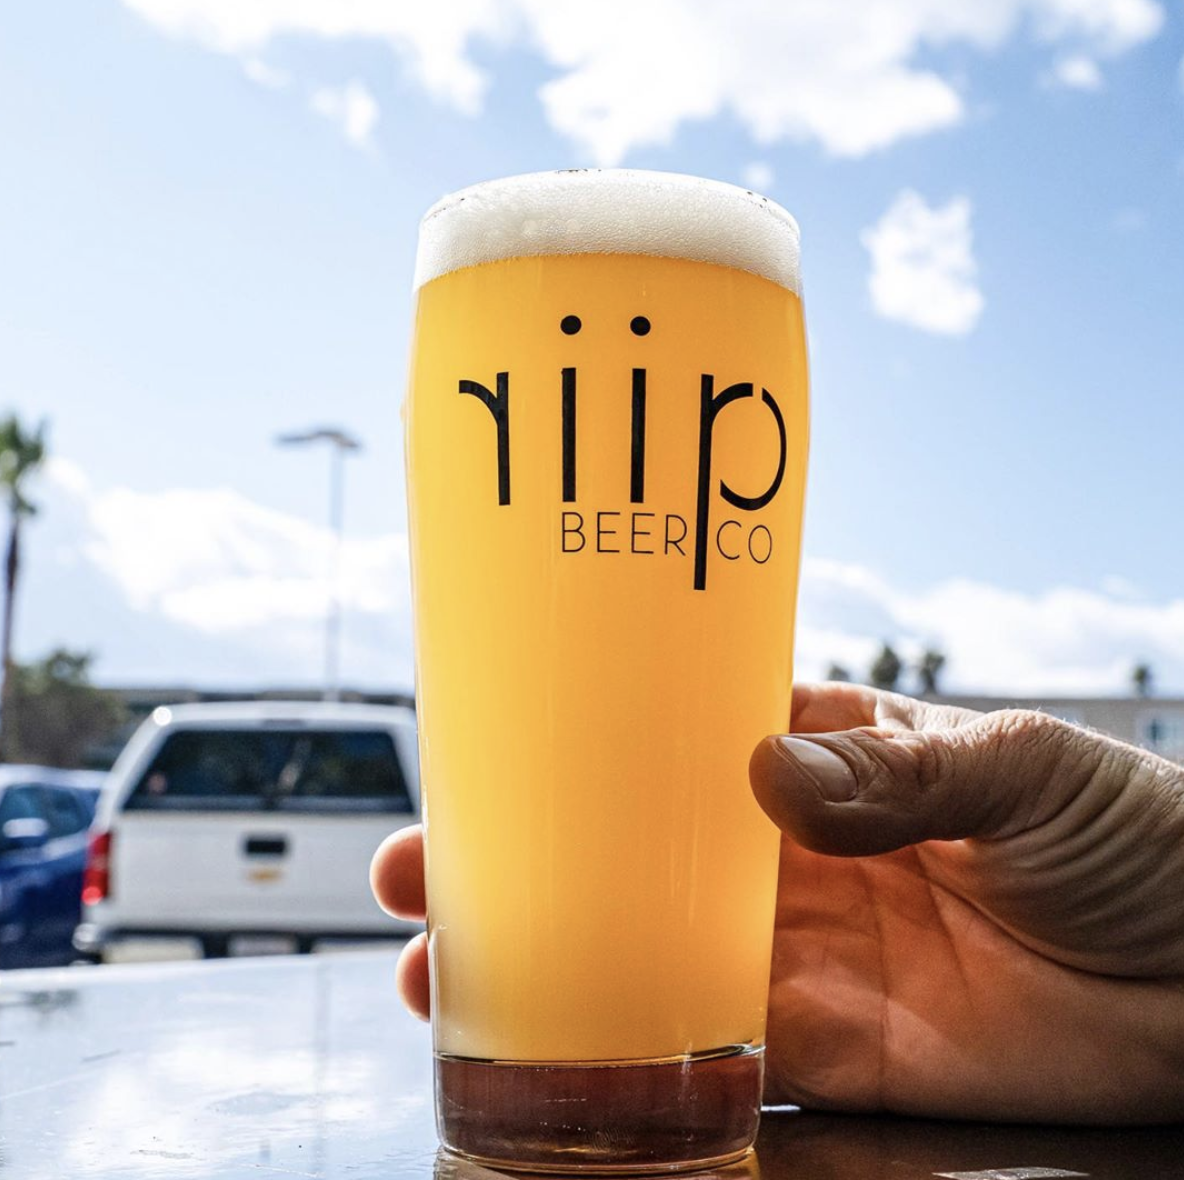 RIIP Beer Co in Huntington Beach